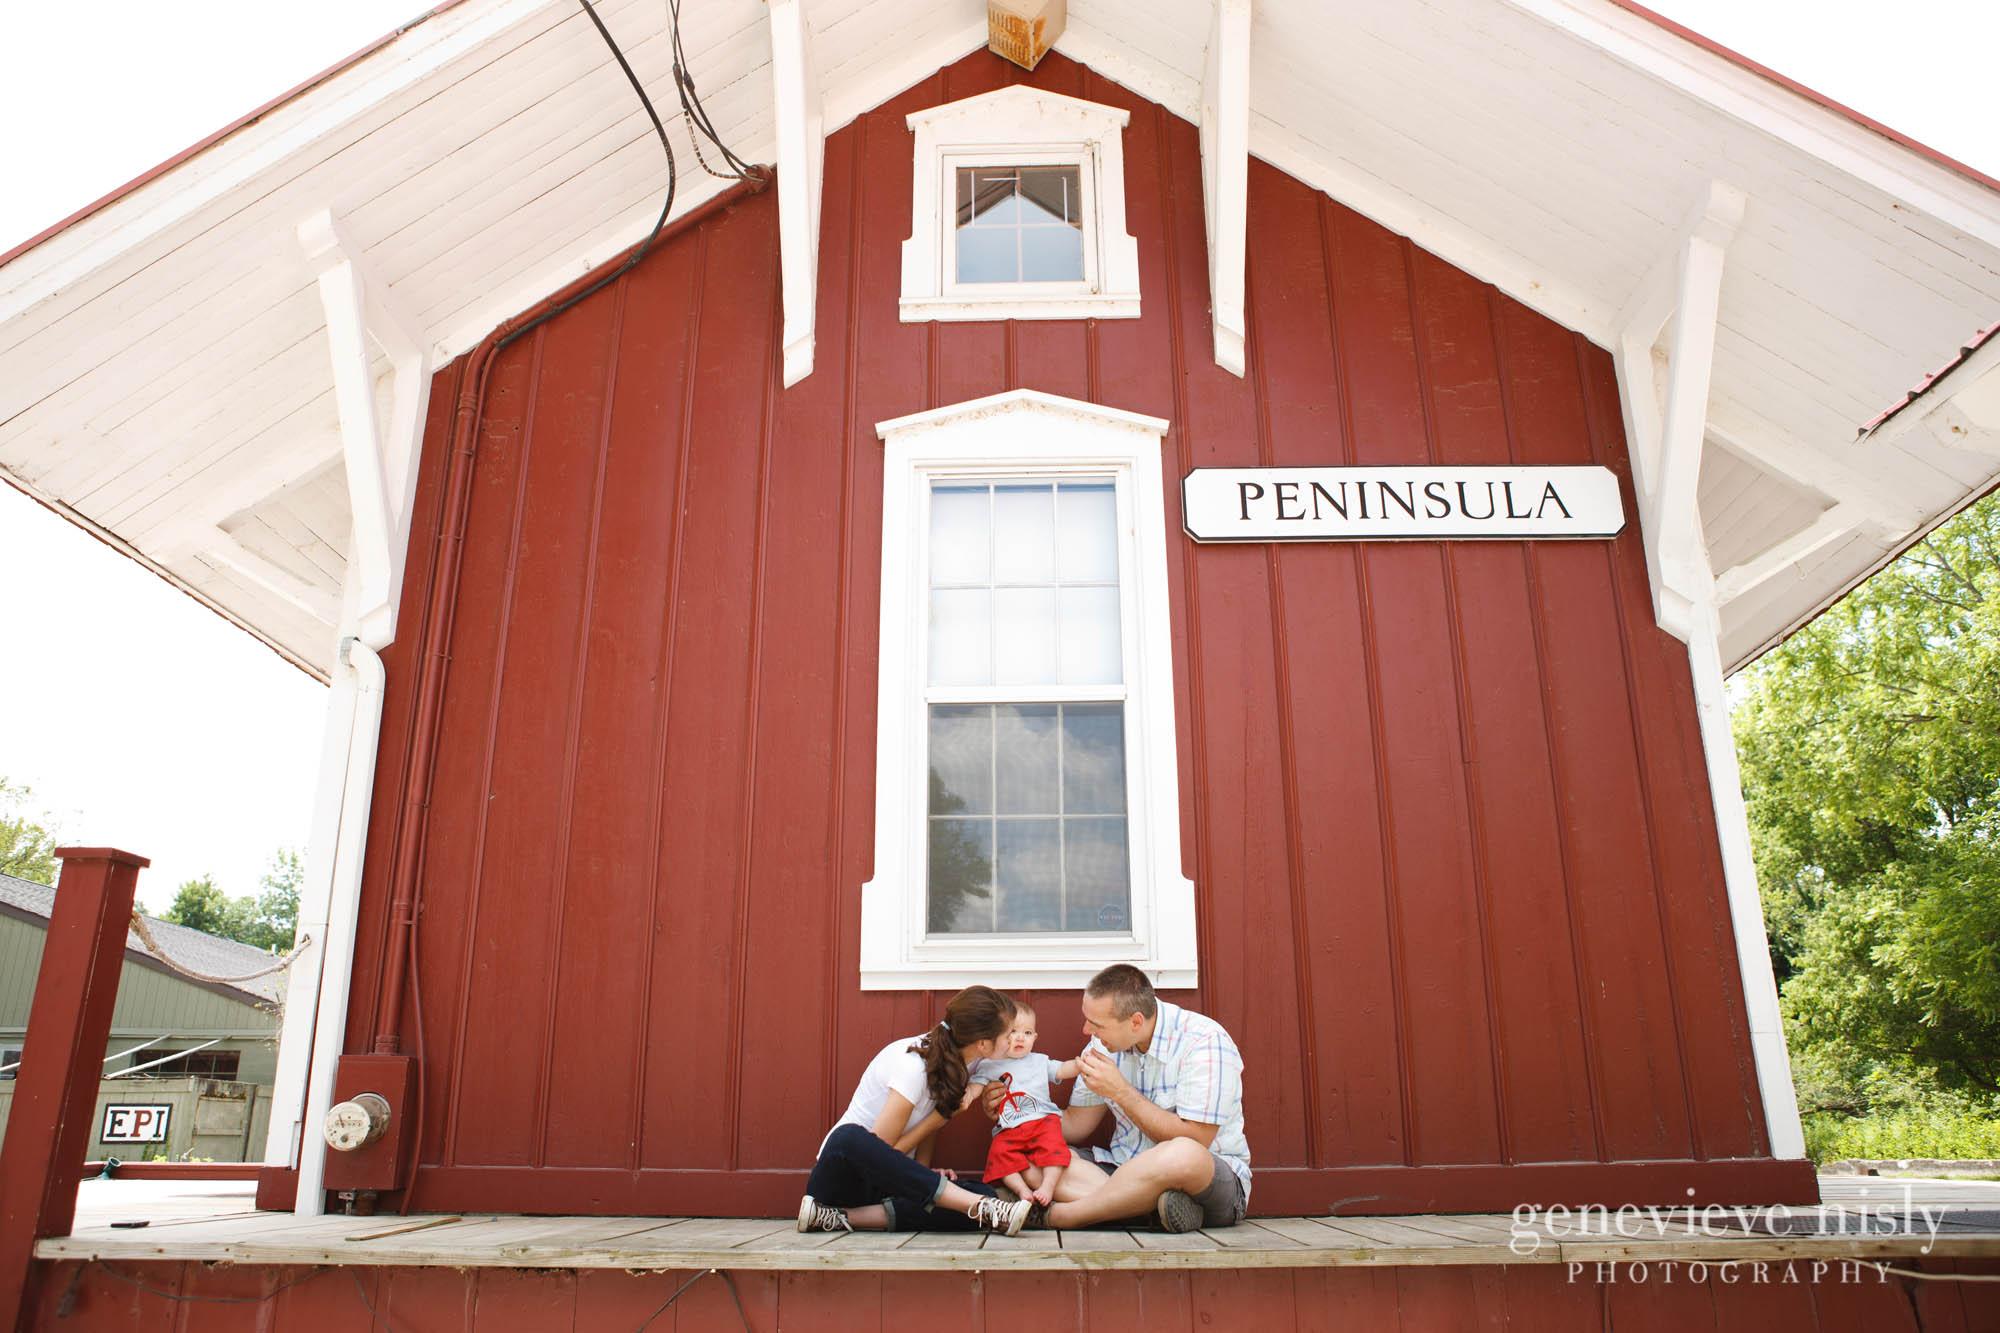  Copyright Genevieve Nisly Photography, Family, Ohio, Peninsula, Portraits, Summer